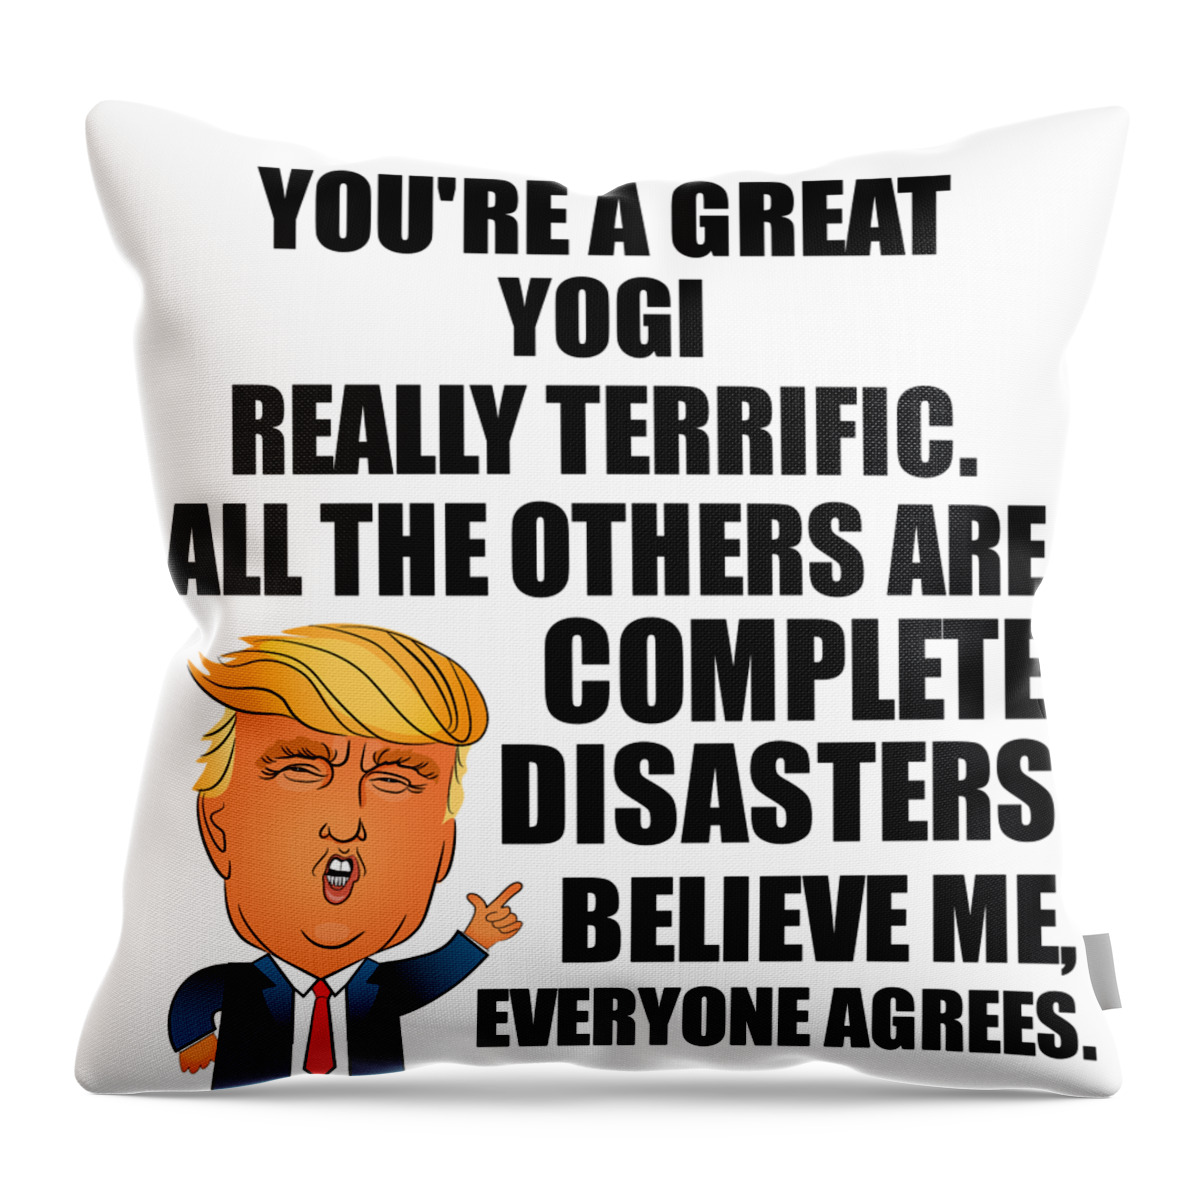 Yogi Throw Pillow featuring the digital art Trump Yogi Funny Gift for Yogi Coworker Gag Great Terrific President Fan Potus Quote Office Joke by Jeff Creation